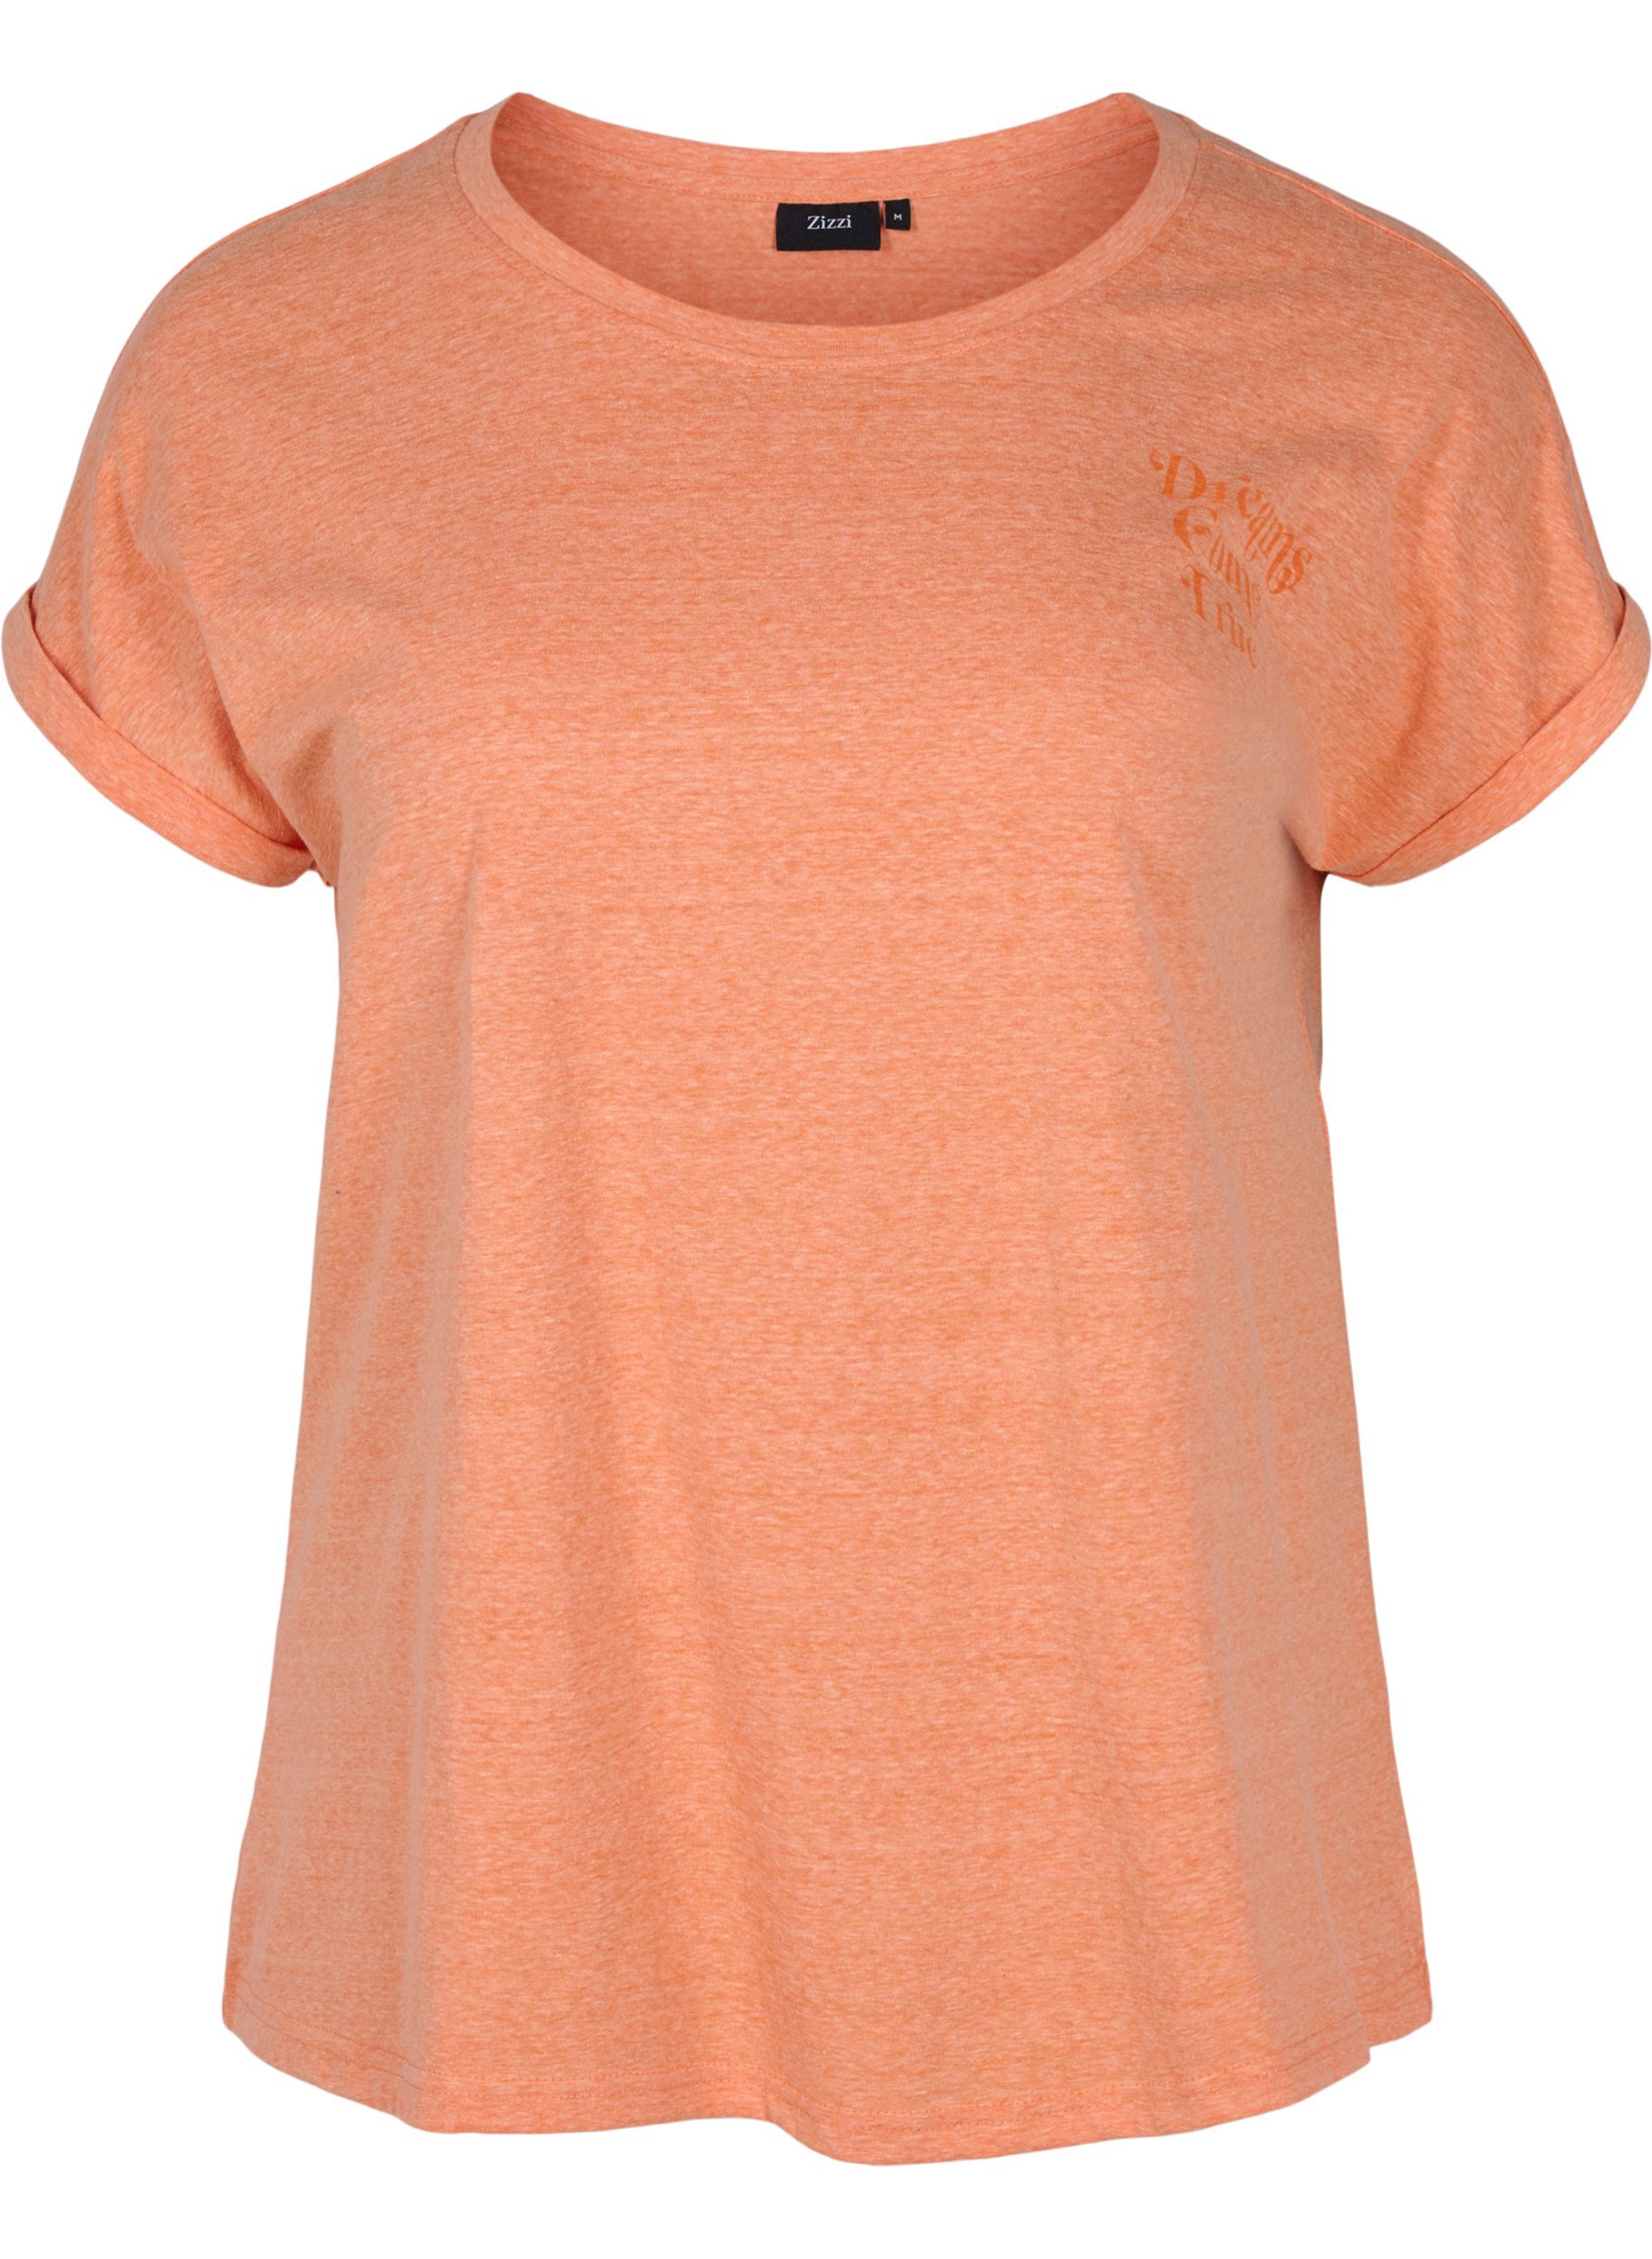 Meliertes T-Shirt aus Baumwolle, Amberglow Melange